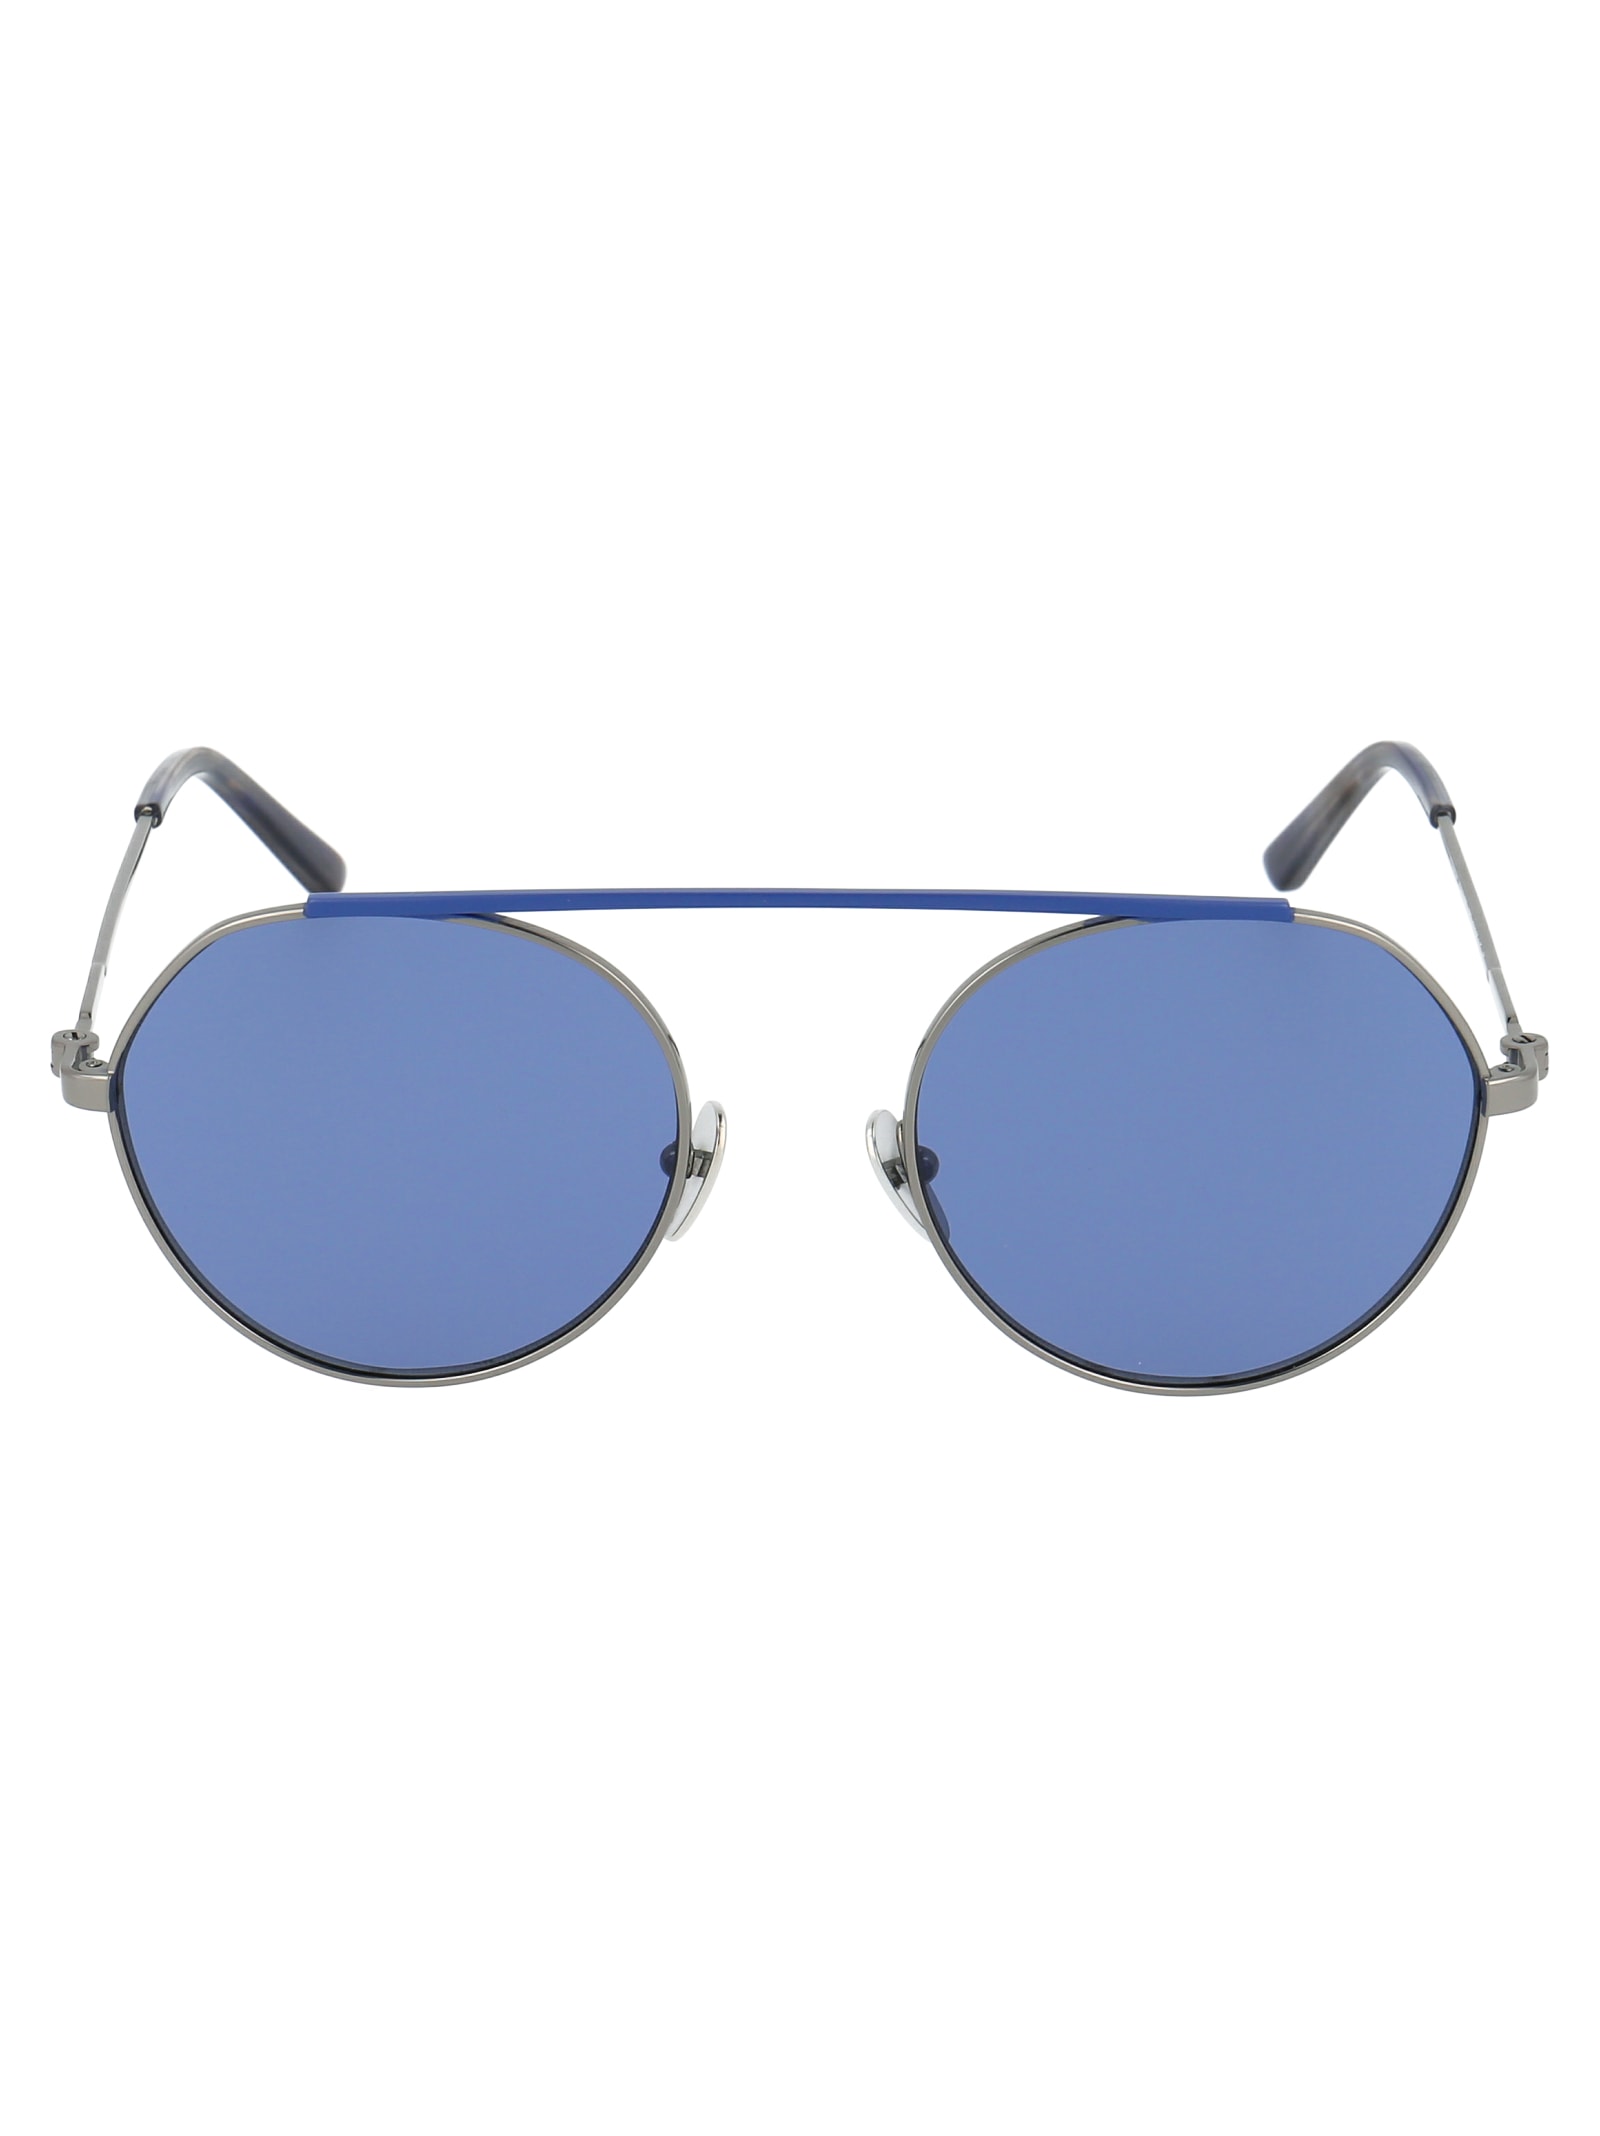 Calvin Klein Ck19149s Sunglasses